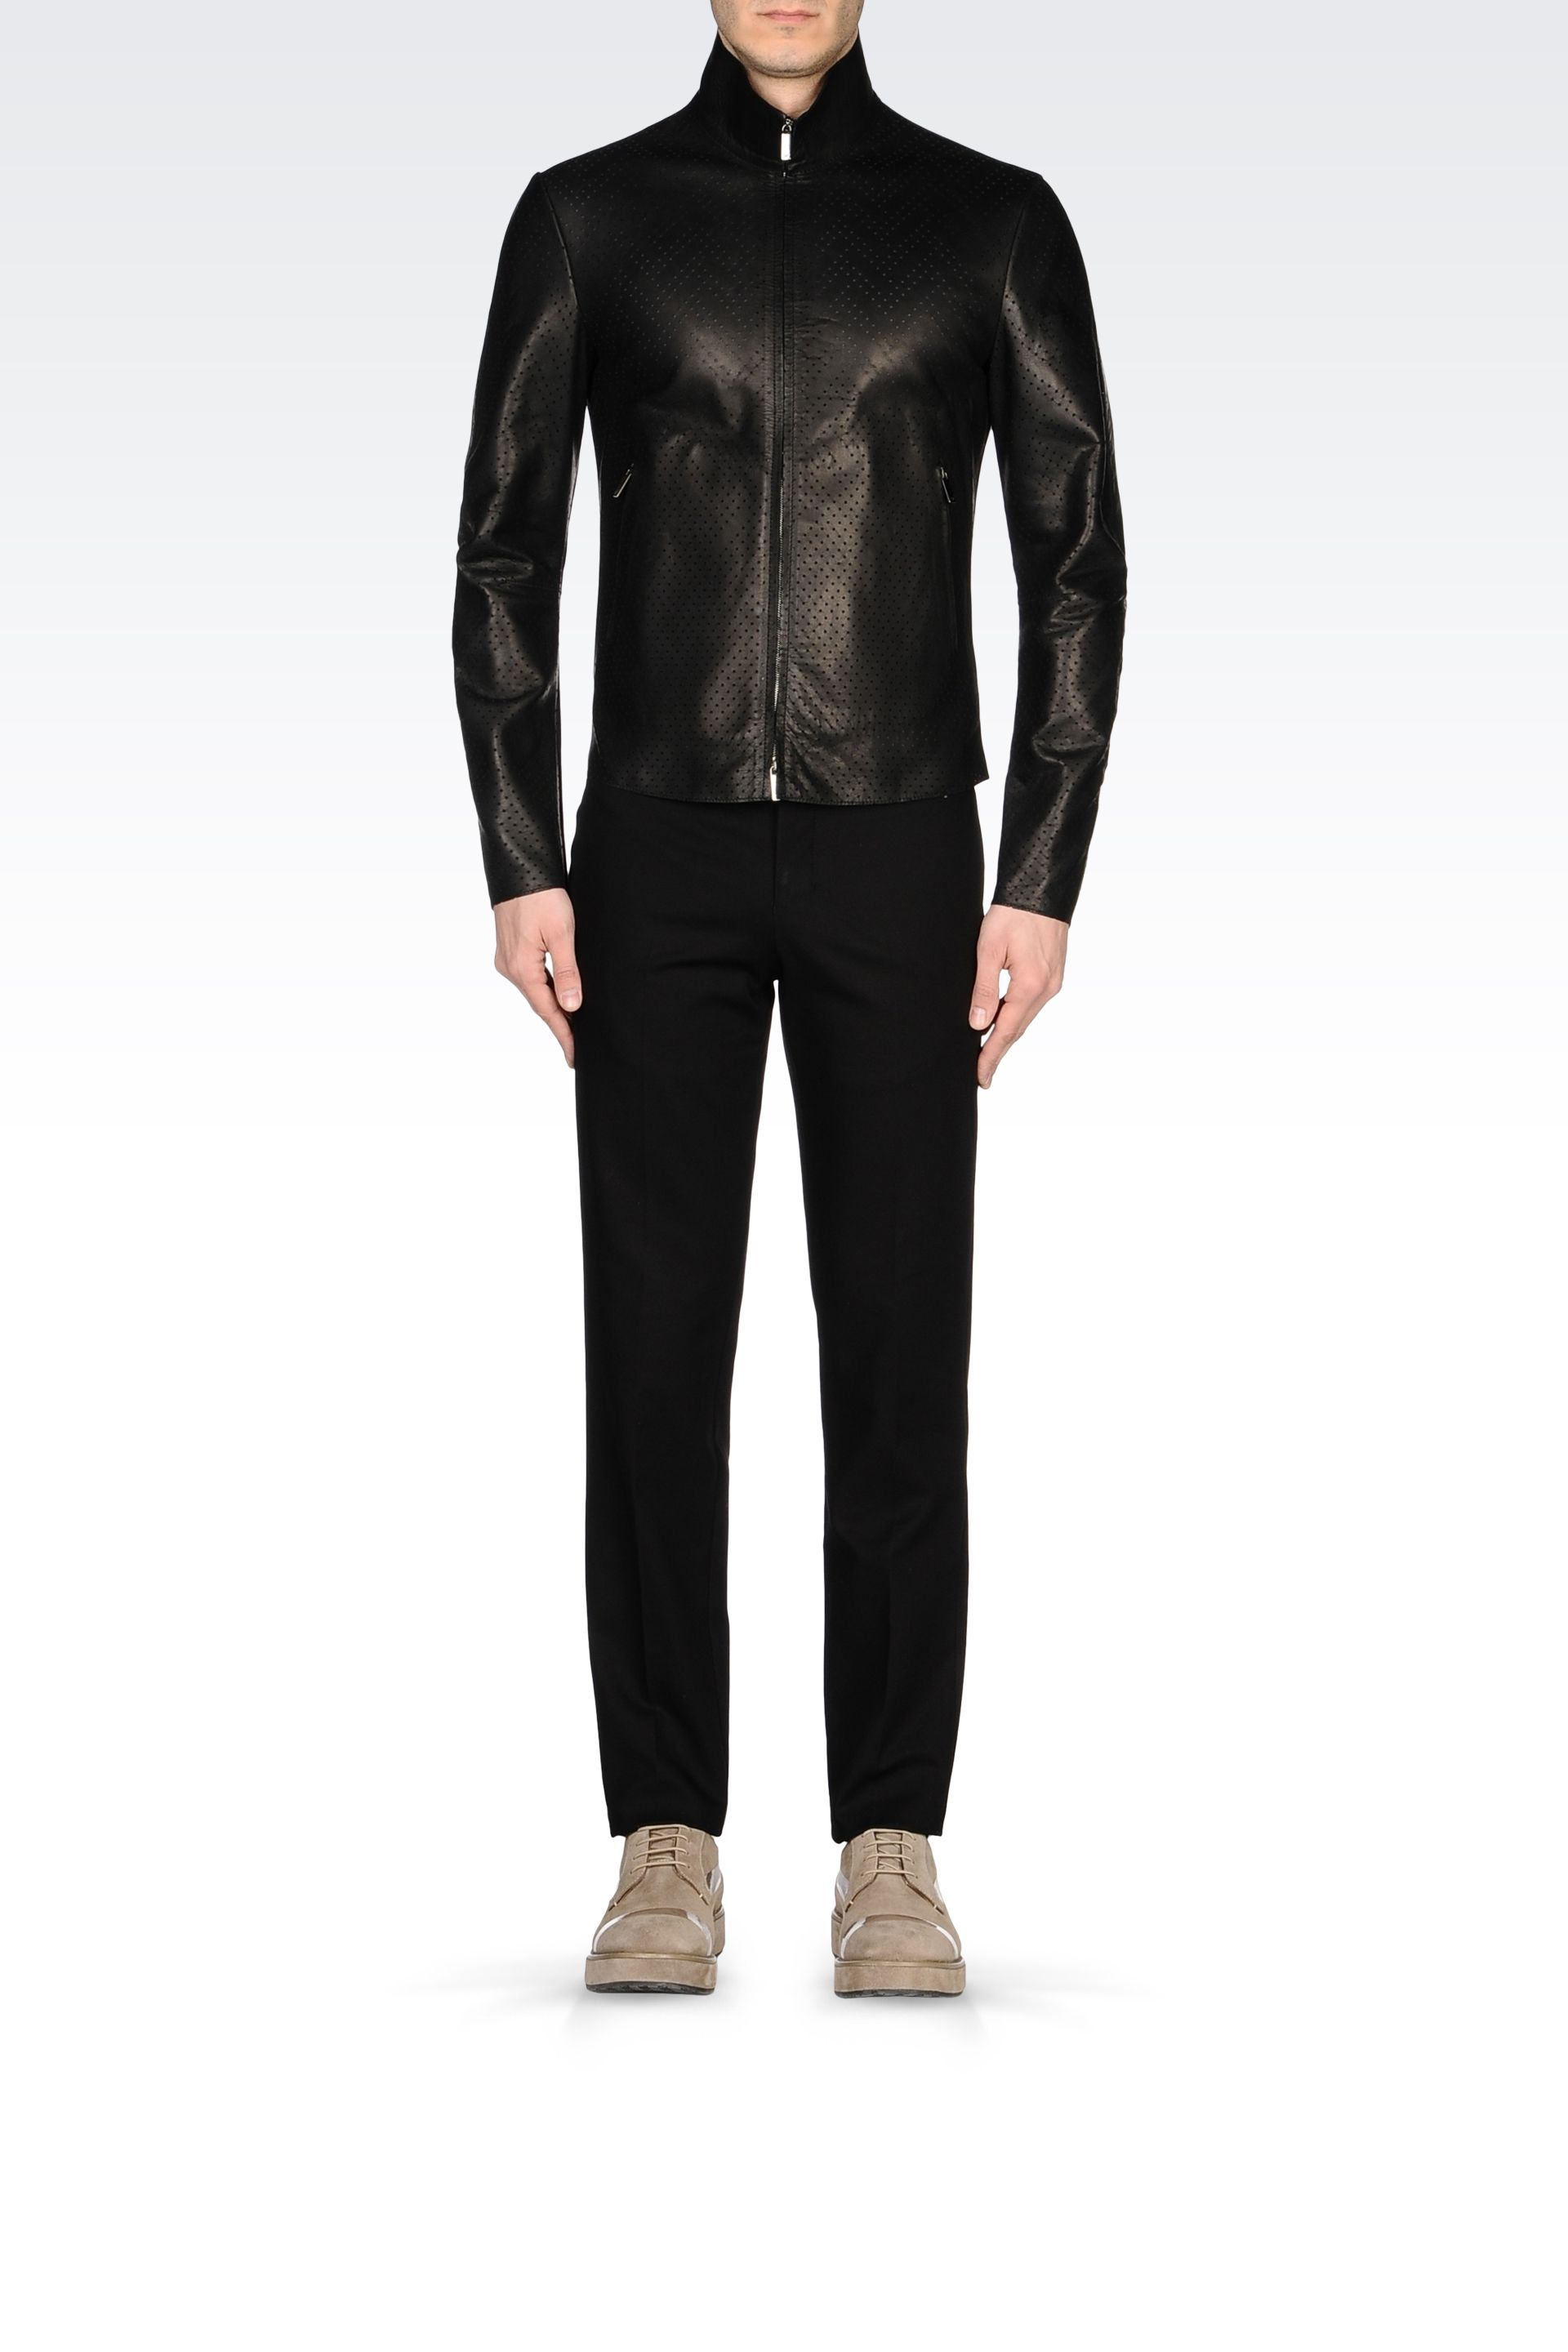 Emporio Armani Leather Jacket in Black 